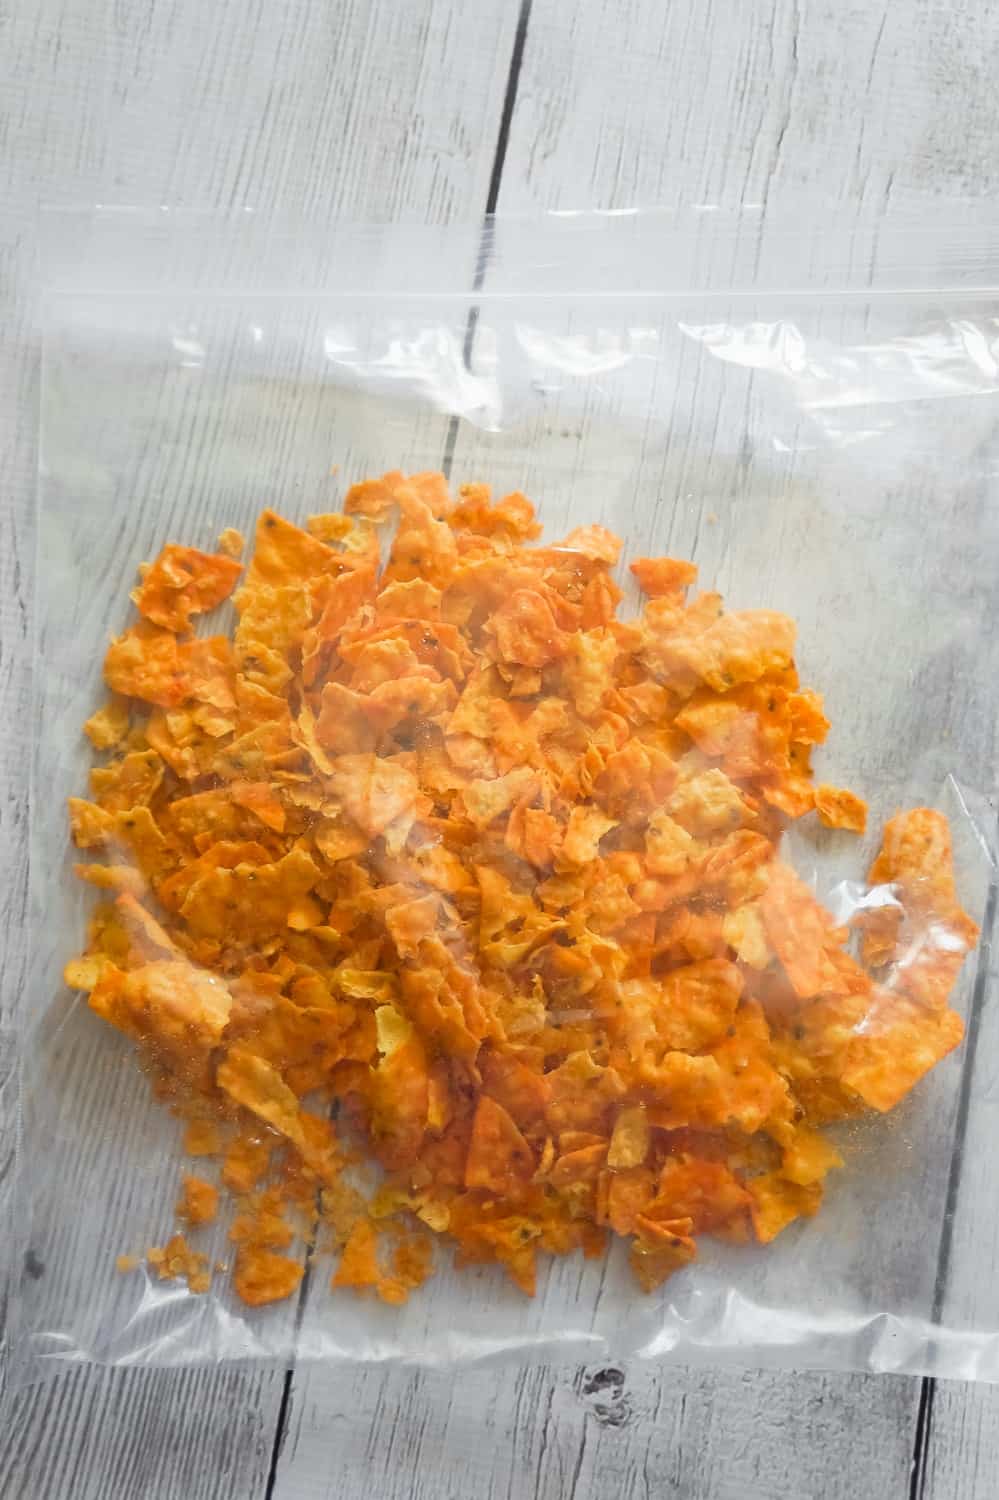 crumbled Doritos in a large Ziploc bag